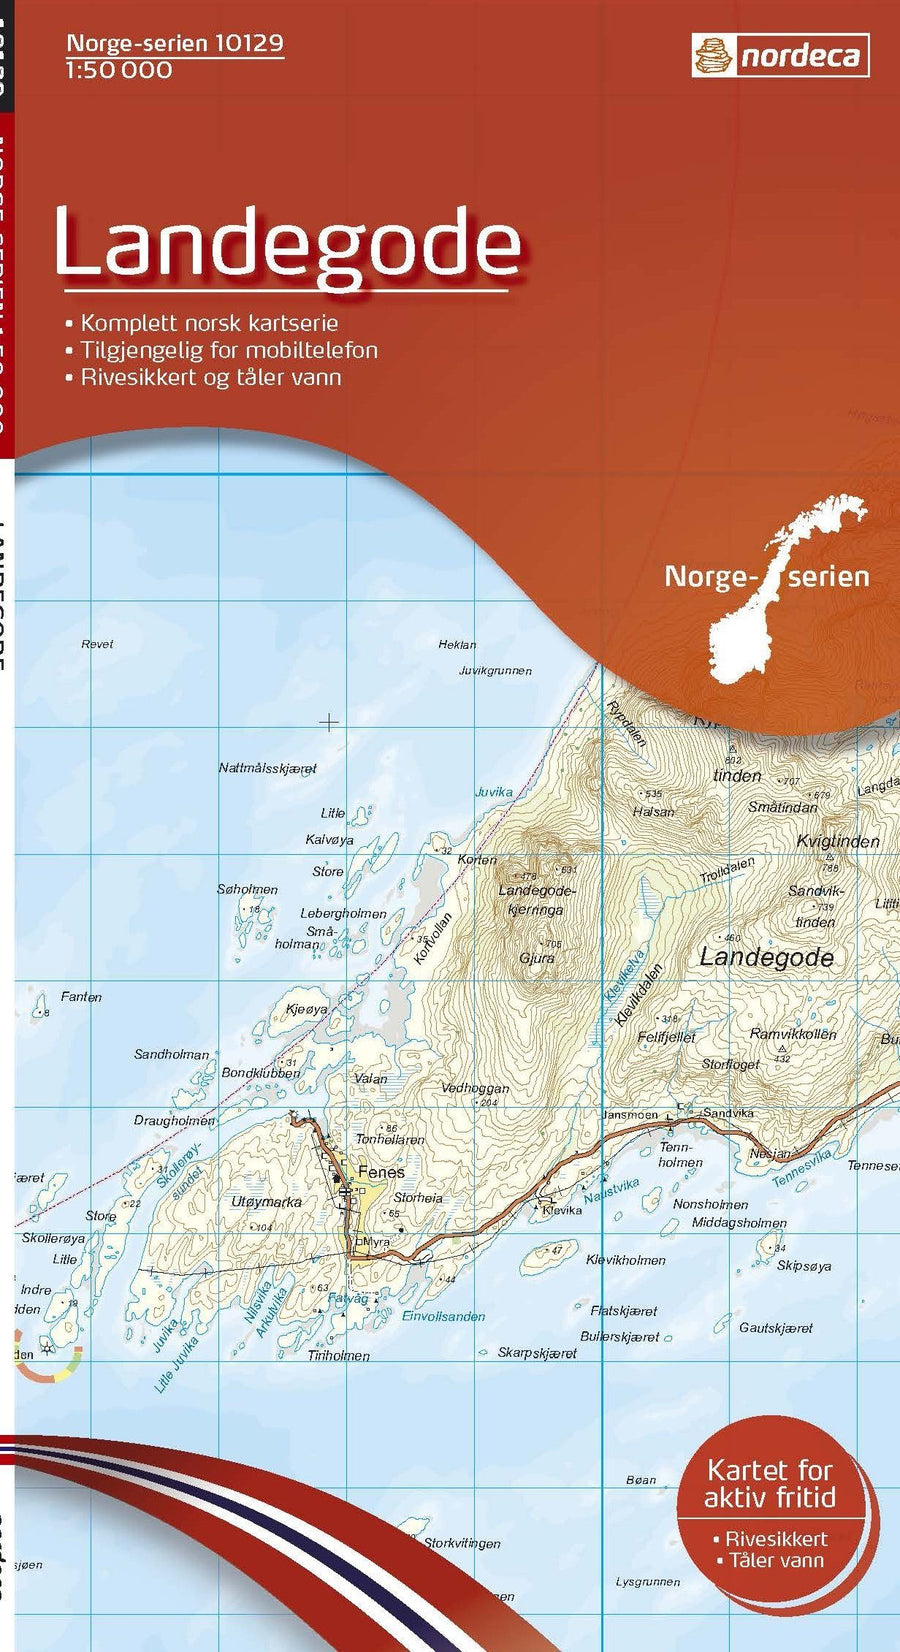 Carte de randonnée n° 10129 - Landegode (Norvège) | Nordeca - Norge-serien carte pliée Nordeca 